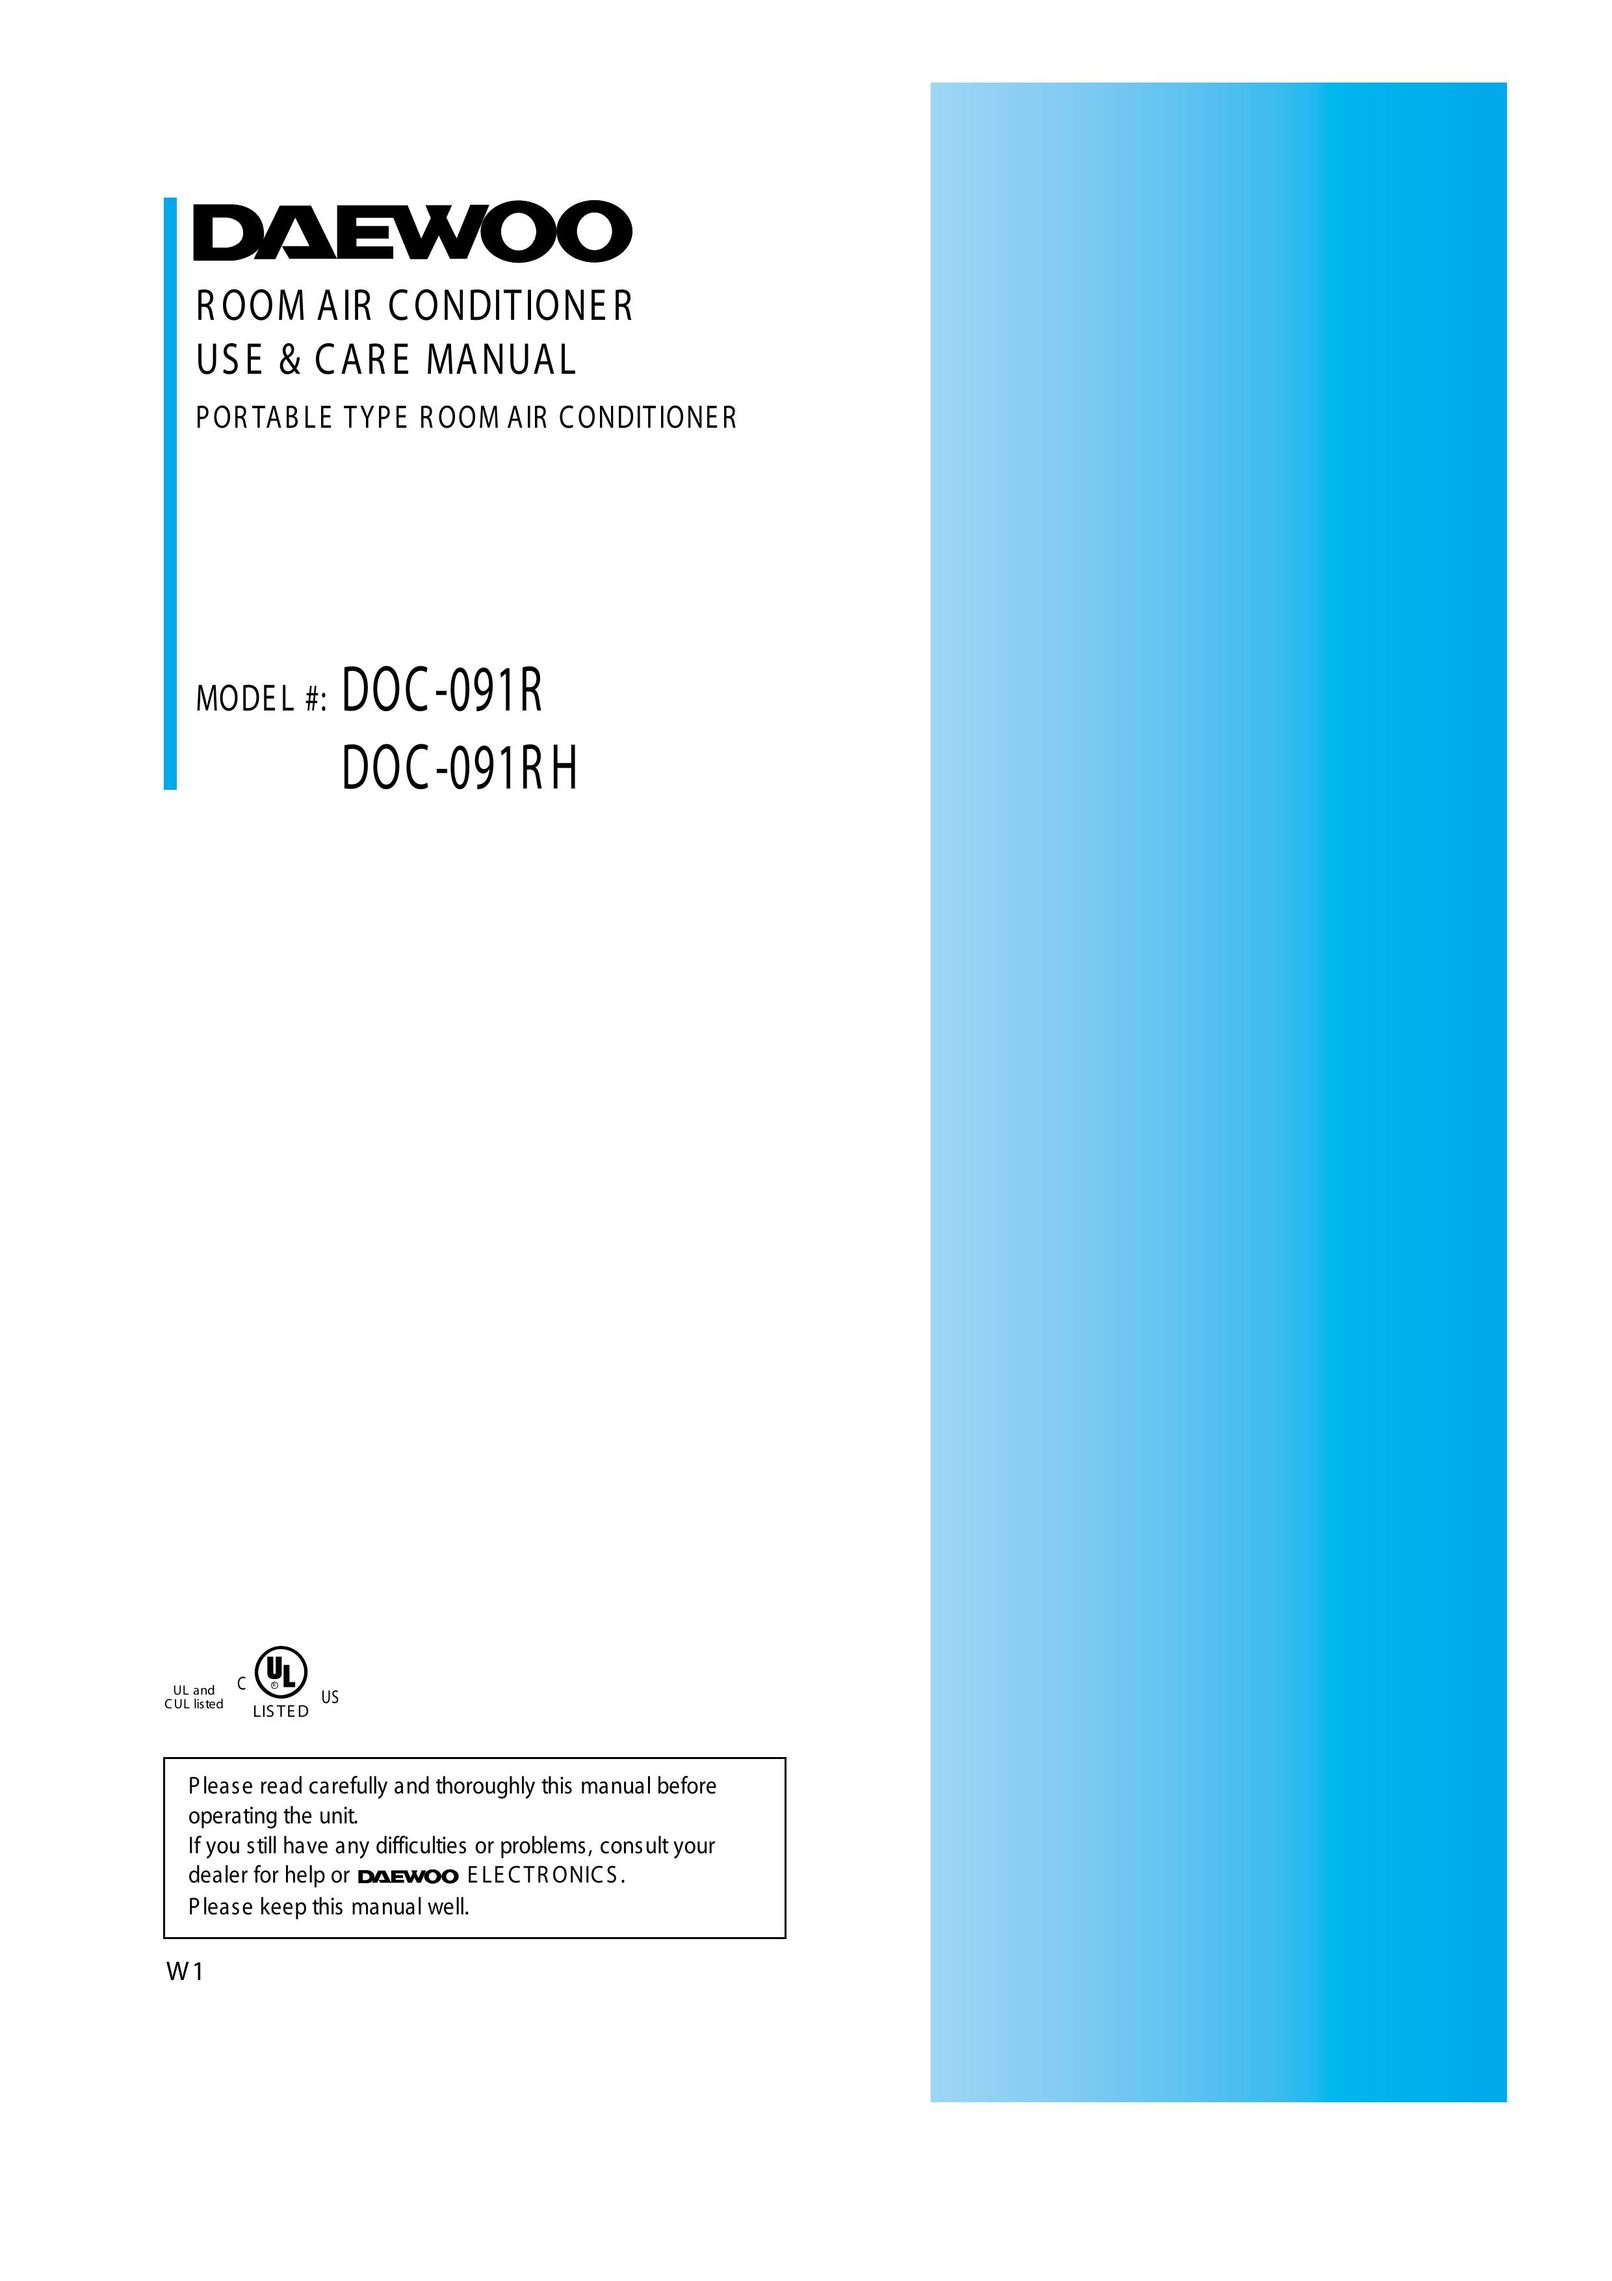 Daewoo DOC-091RH Air Conditioner User Manual